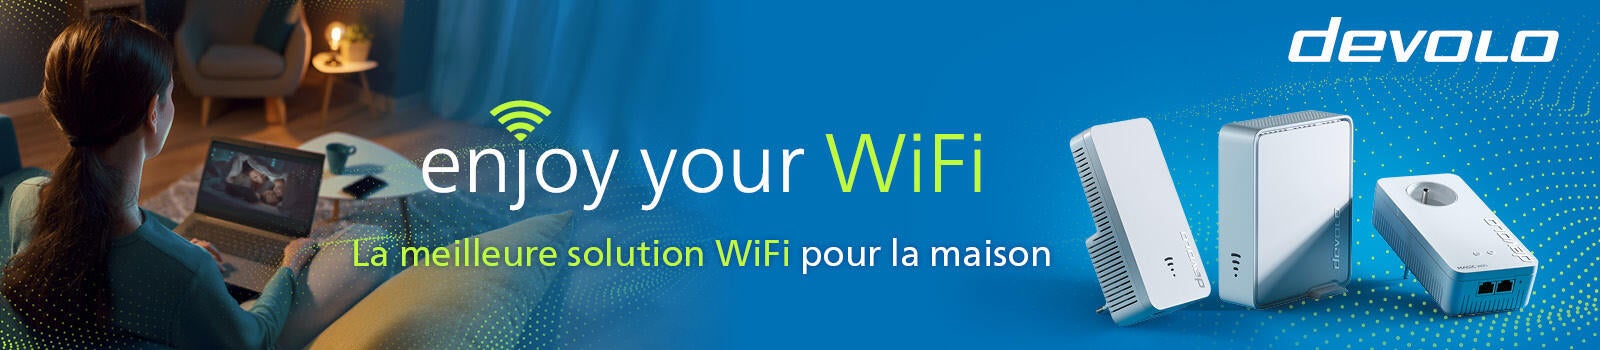 Devolo dLAN 1200 Wi-Fi AC (9790) - Répéteur Wi-Fi - Garantie 3 ans